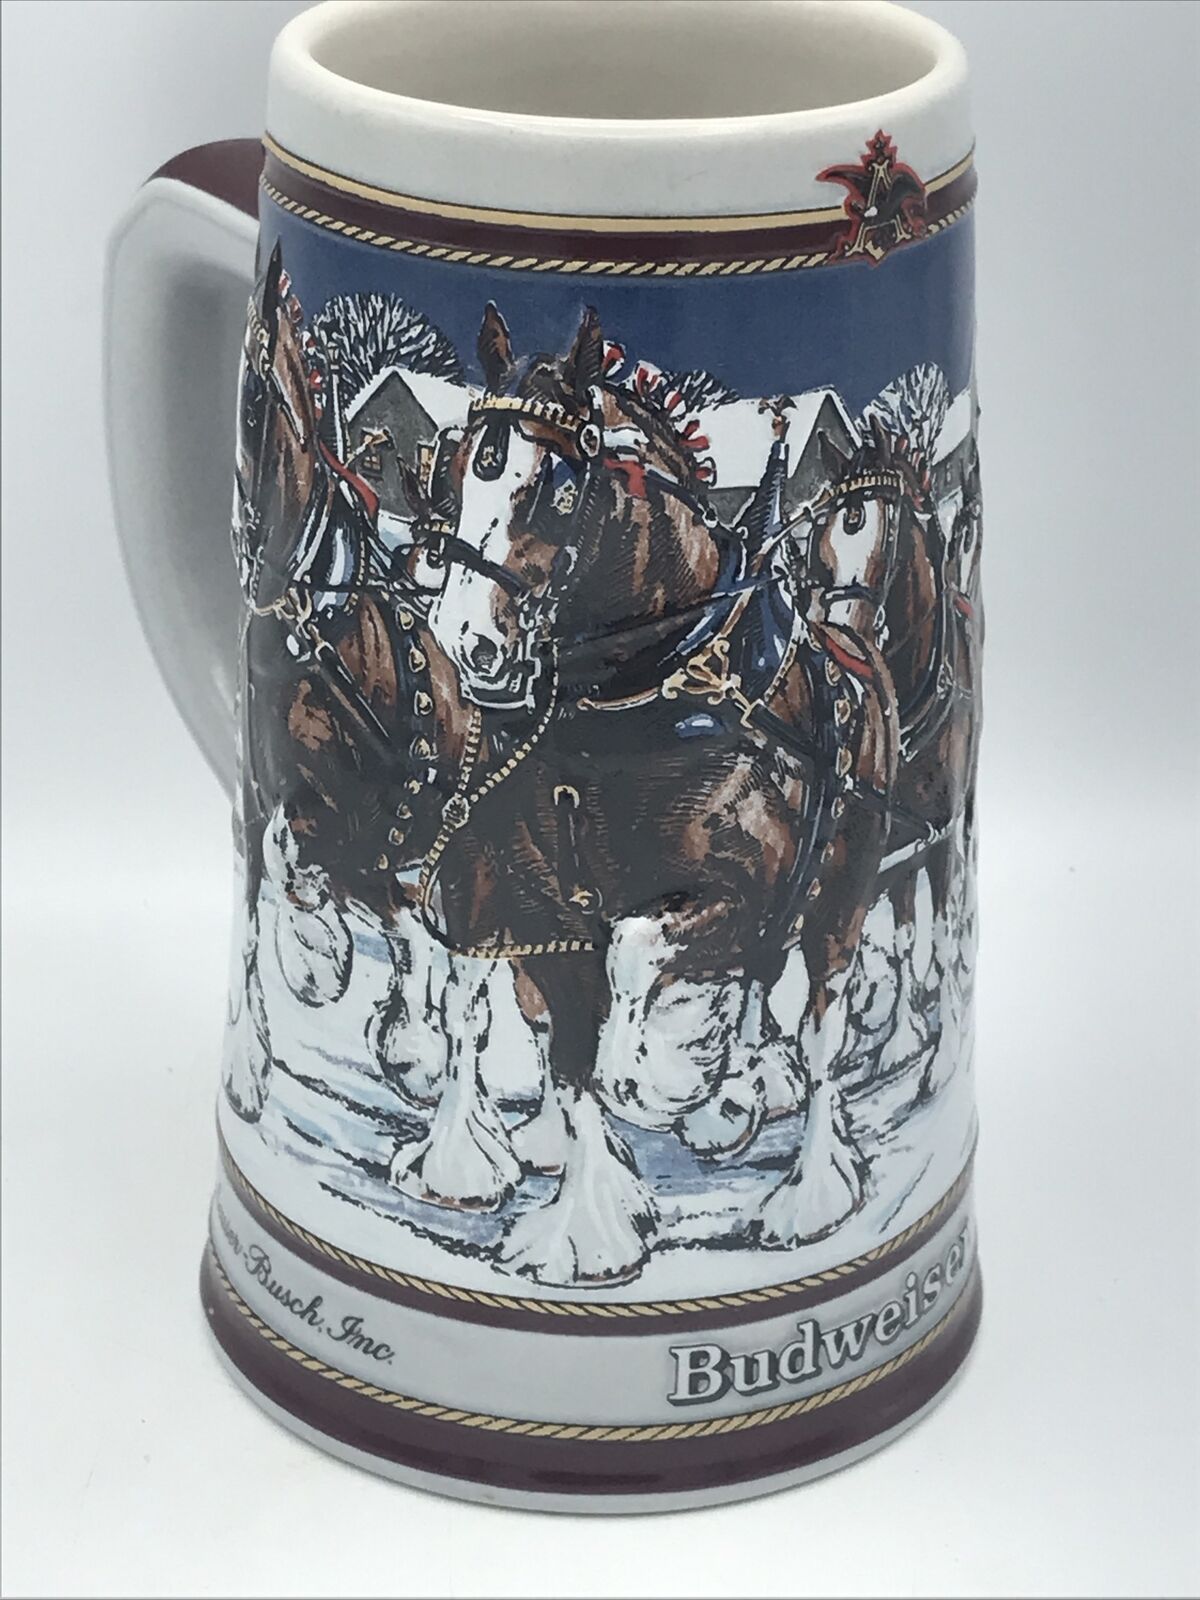 Vintage 1989 Budweiser Beer Stein Mug Ceramic Cup Large Collectible